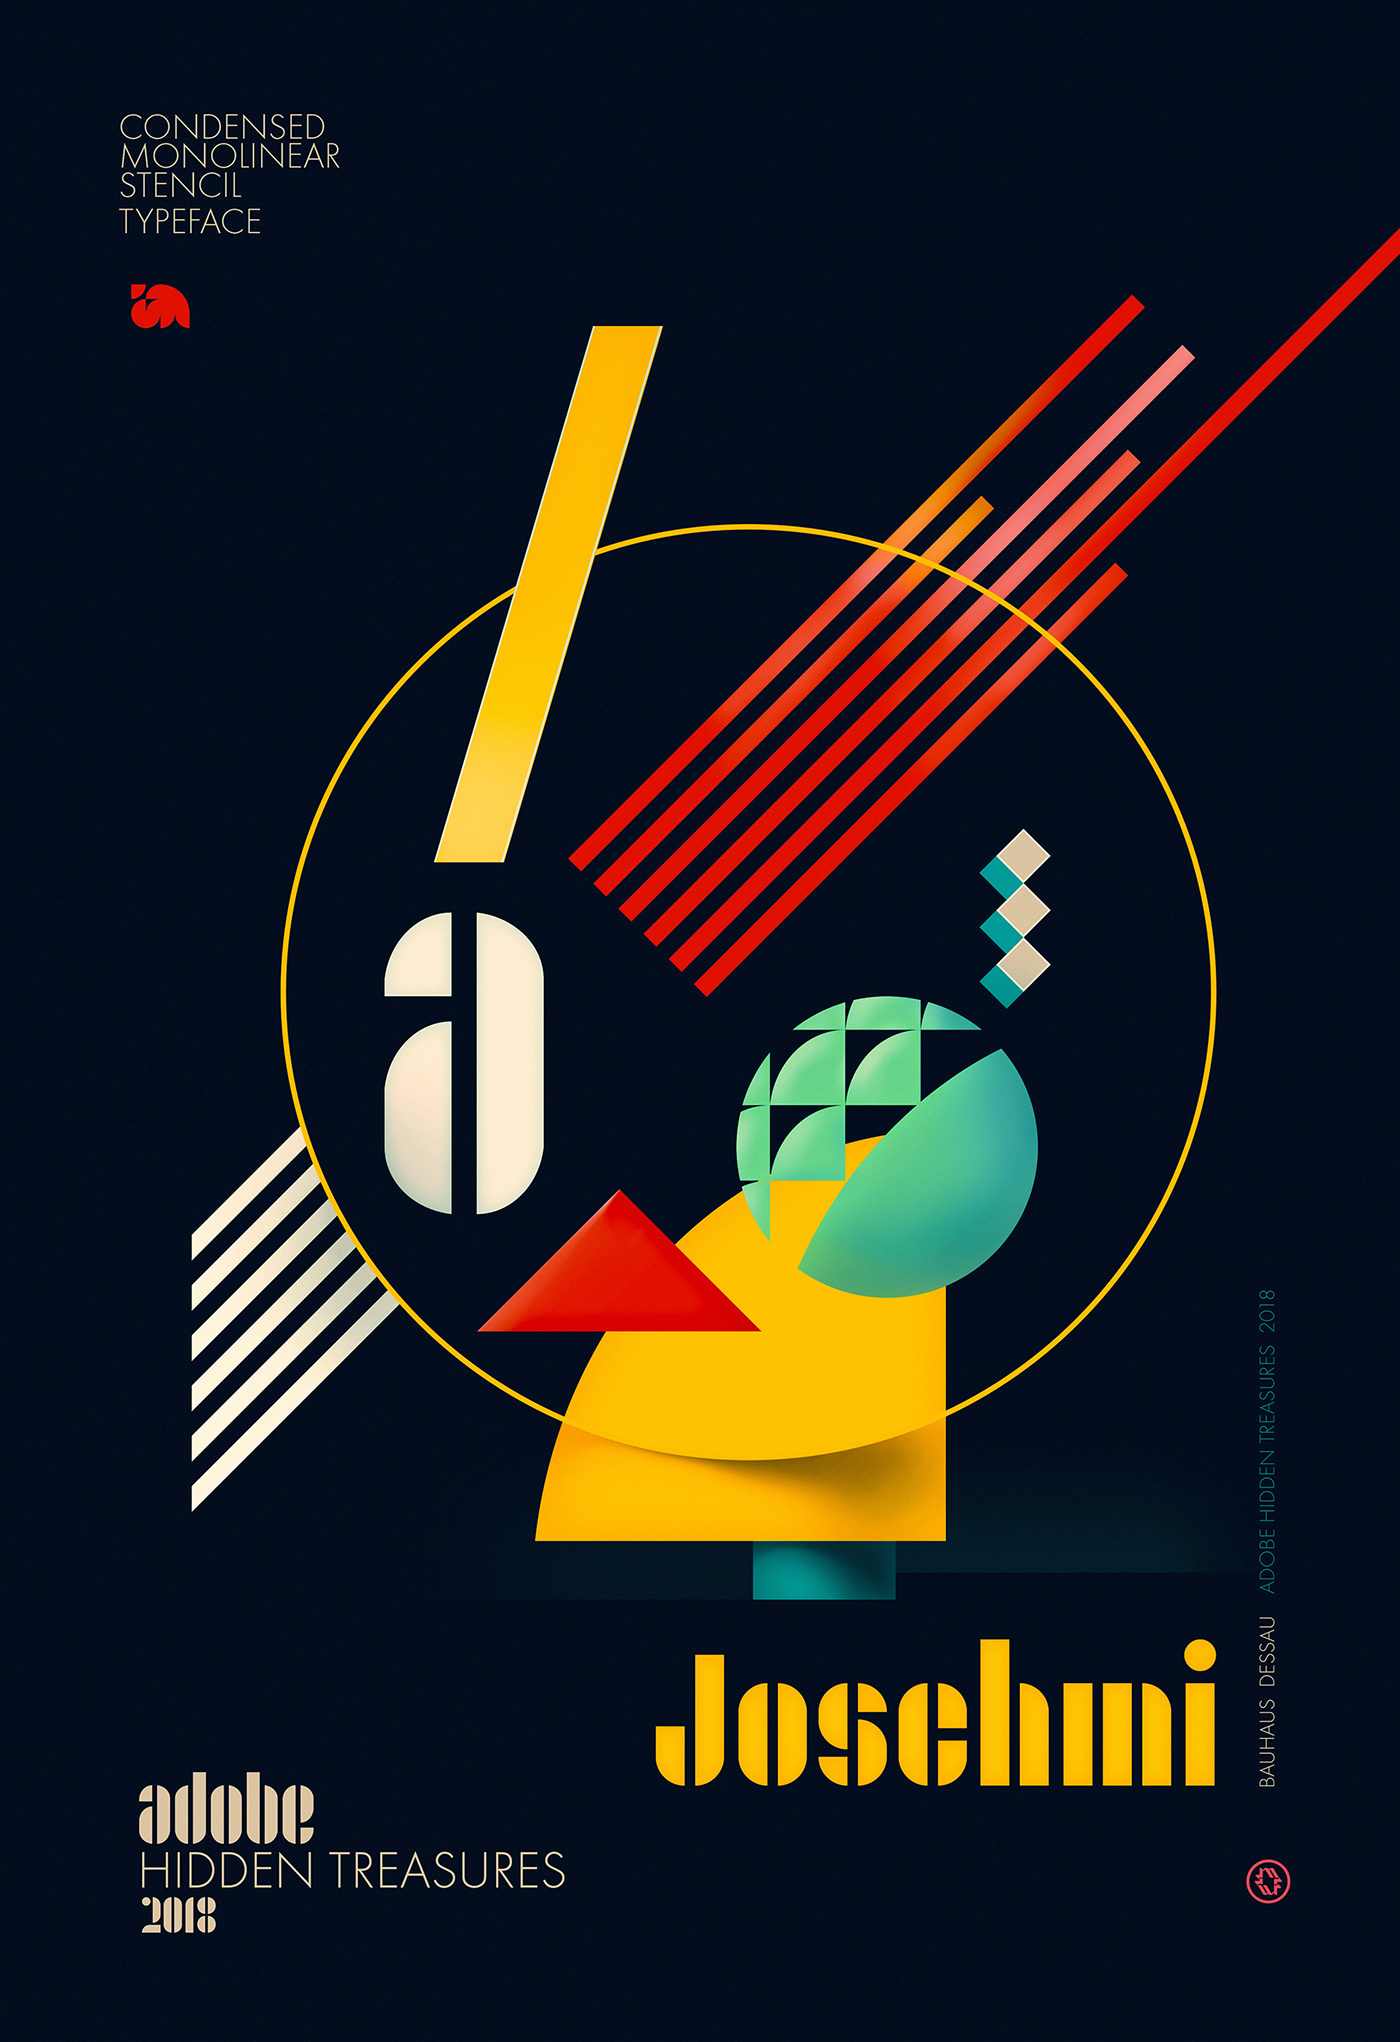 AdobeHiddenTreasures contest bauhaus wflemming color posters bauhaus 100 modernism